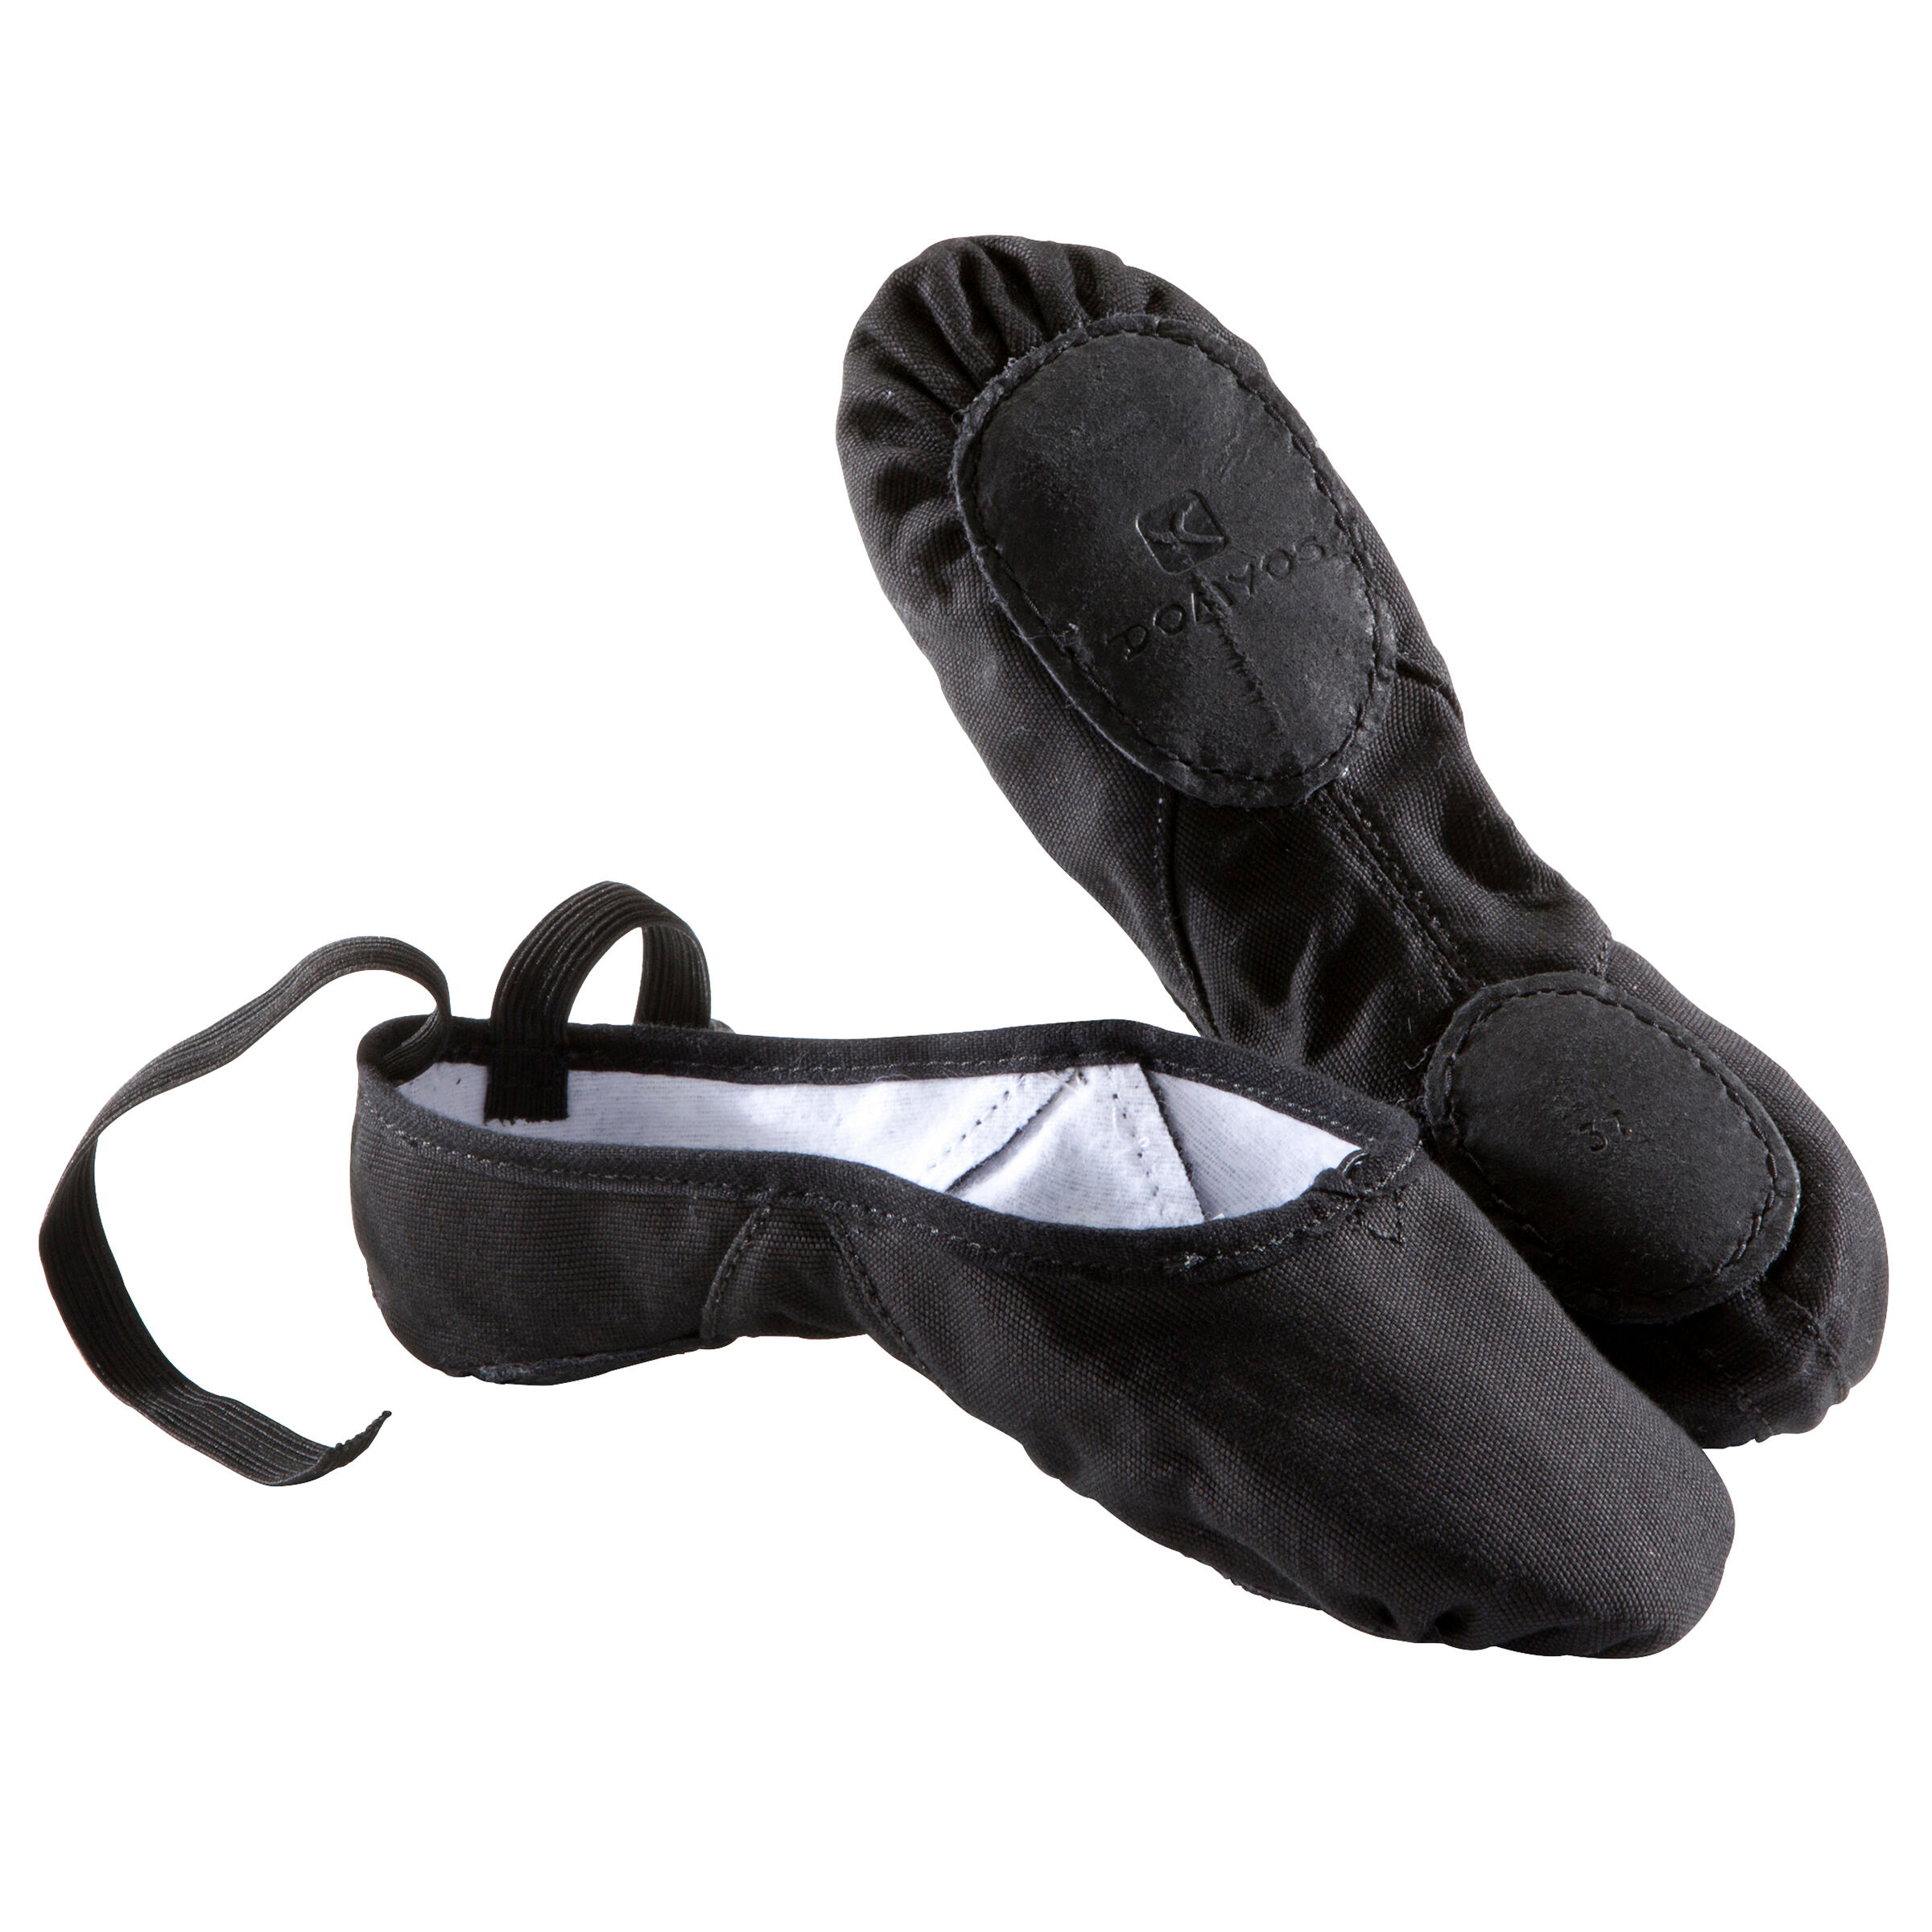 Ballerina Shoes, Ballet Pointe Shoes 